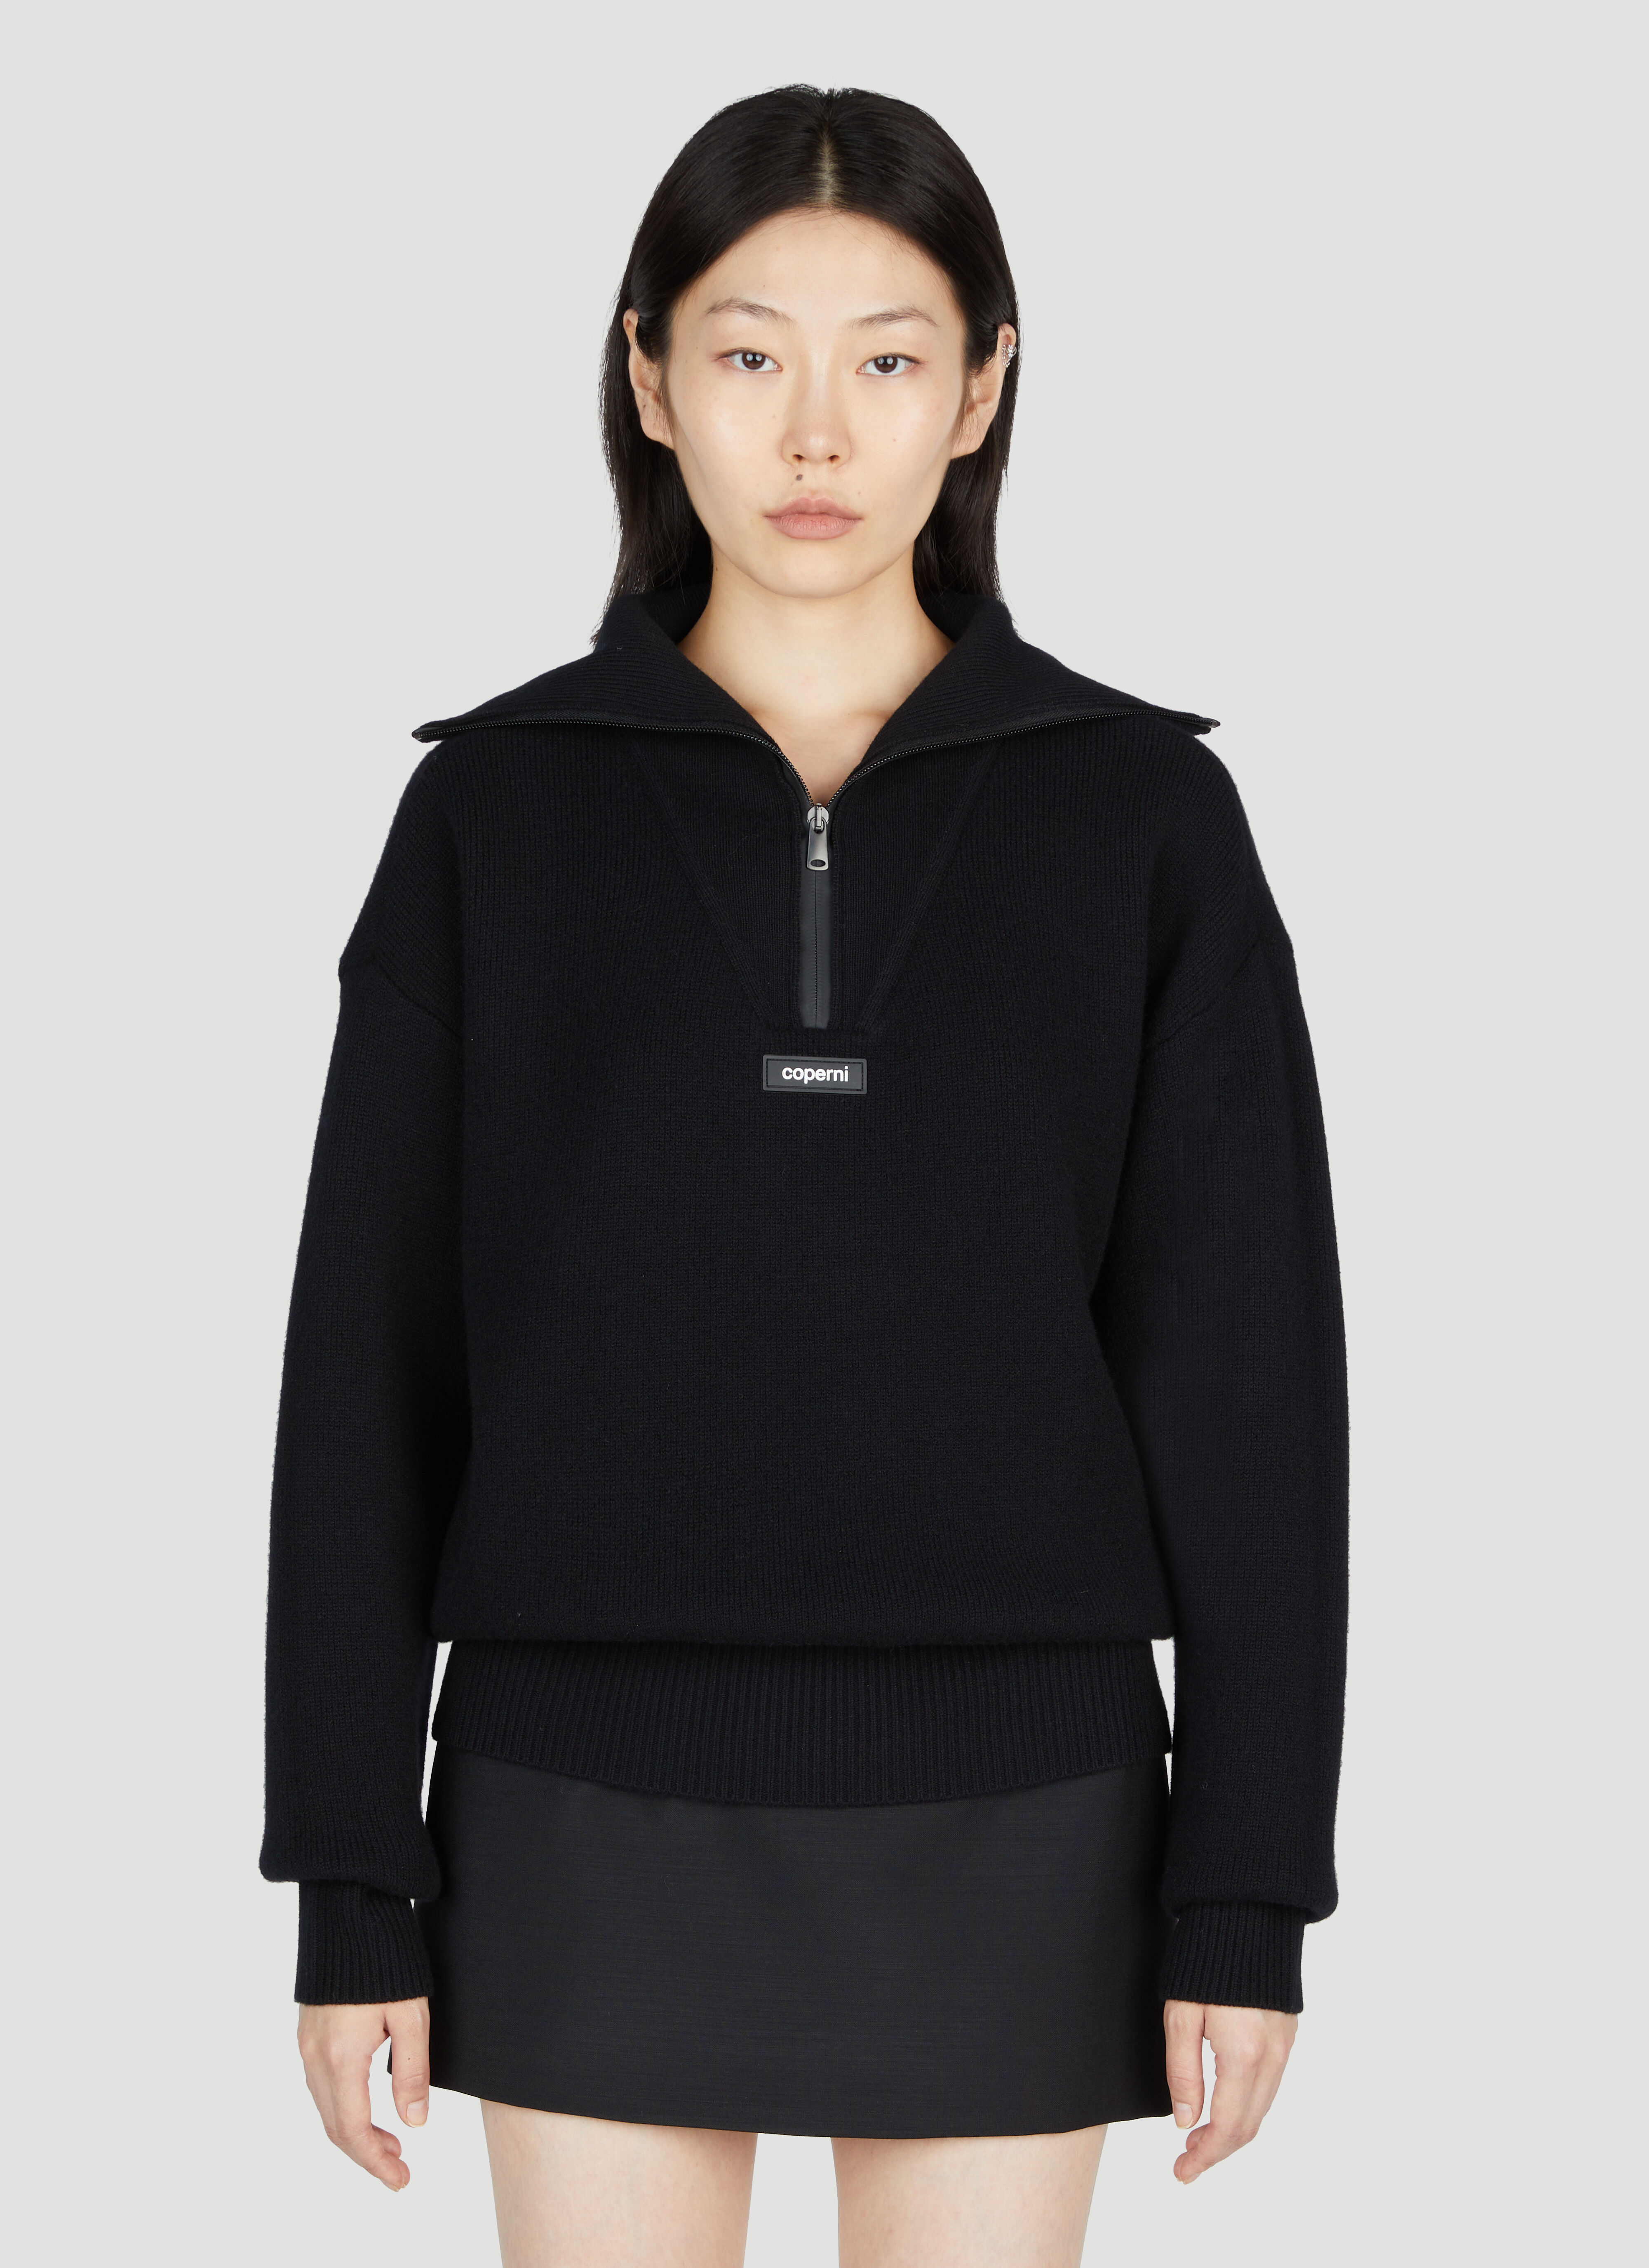 Coperni Half-Zip Boxy Sweater Black cpn0253019